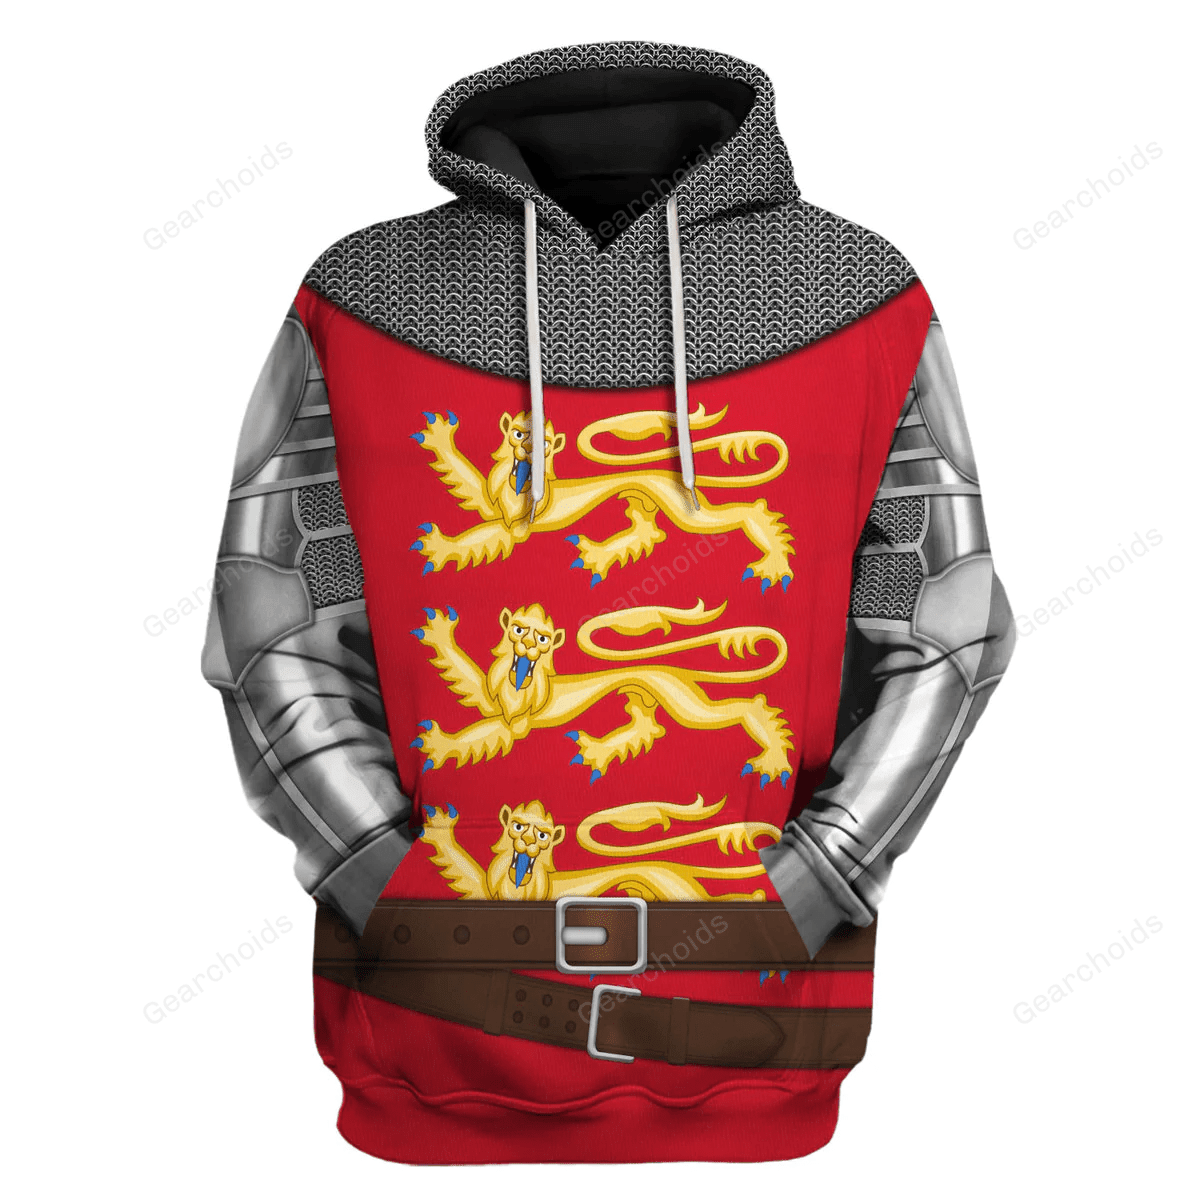 Gearchoids Richard The Lionheart Knight A Royal Heraldry Costume Hoodie Sweatshirt T-Shirt Tracksuit